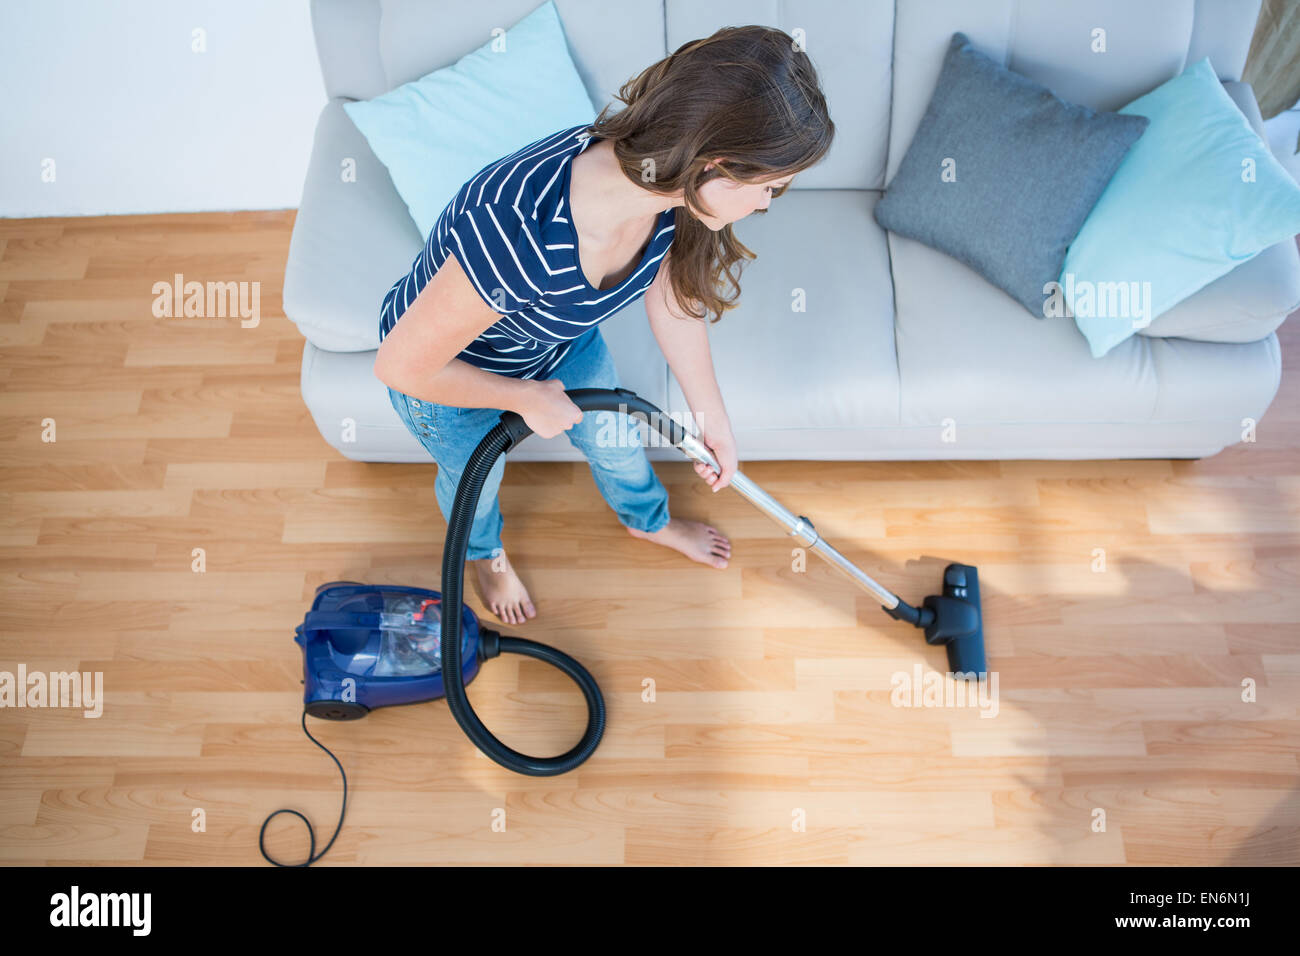 Woman using vacuum cleaner on wooden floor Stock Photo